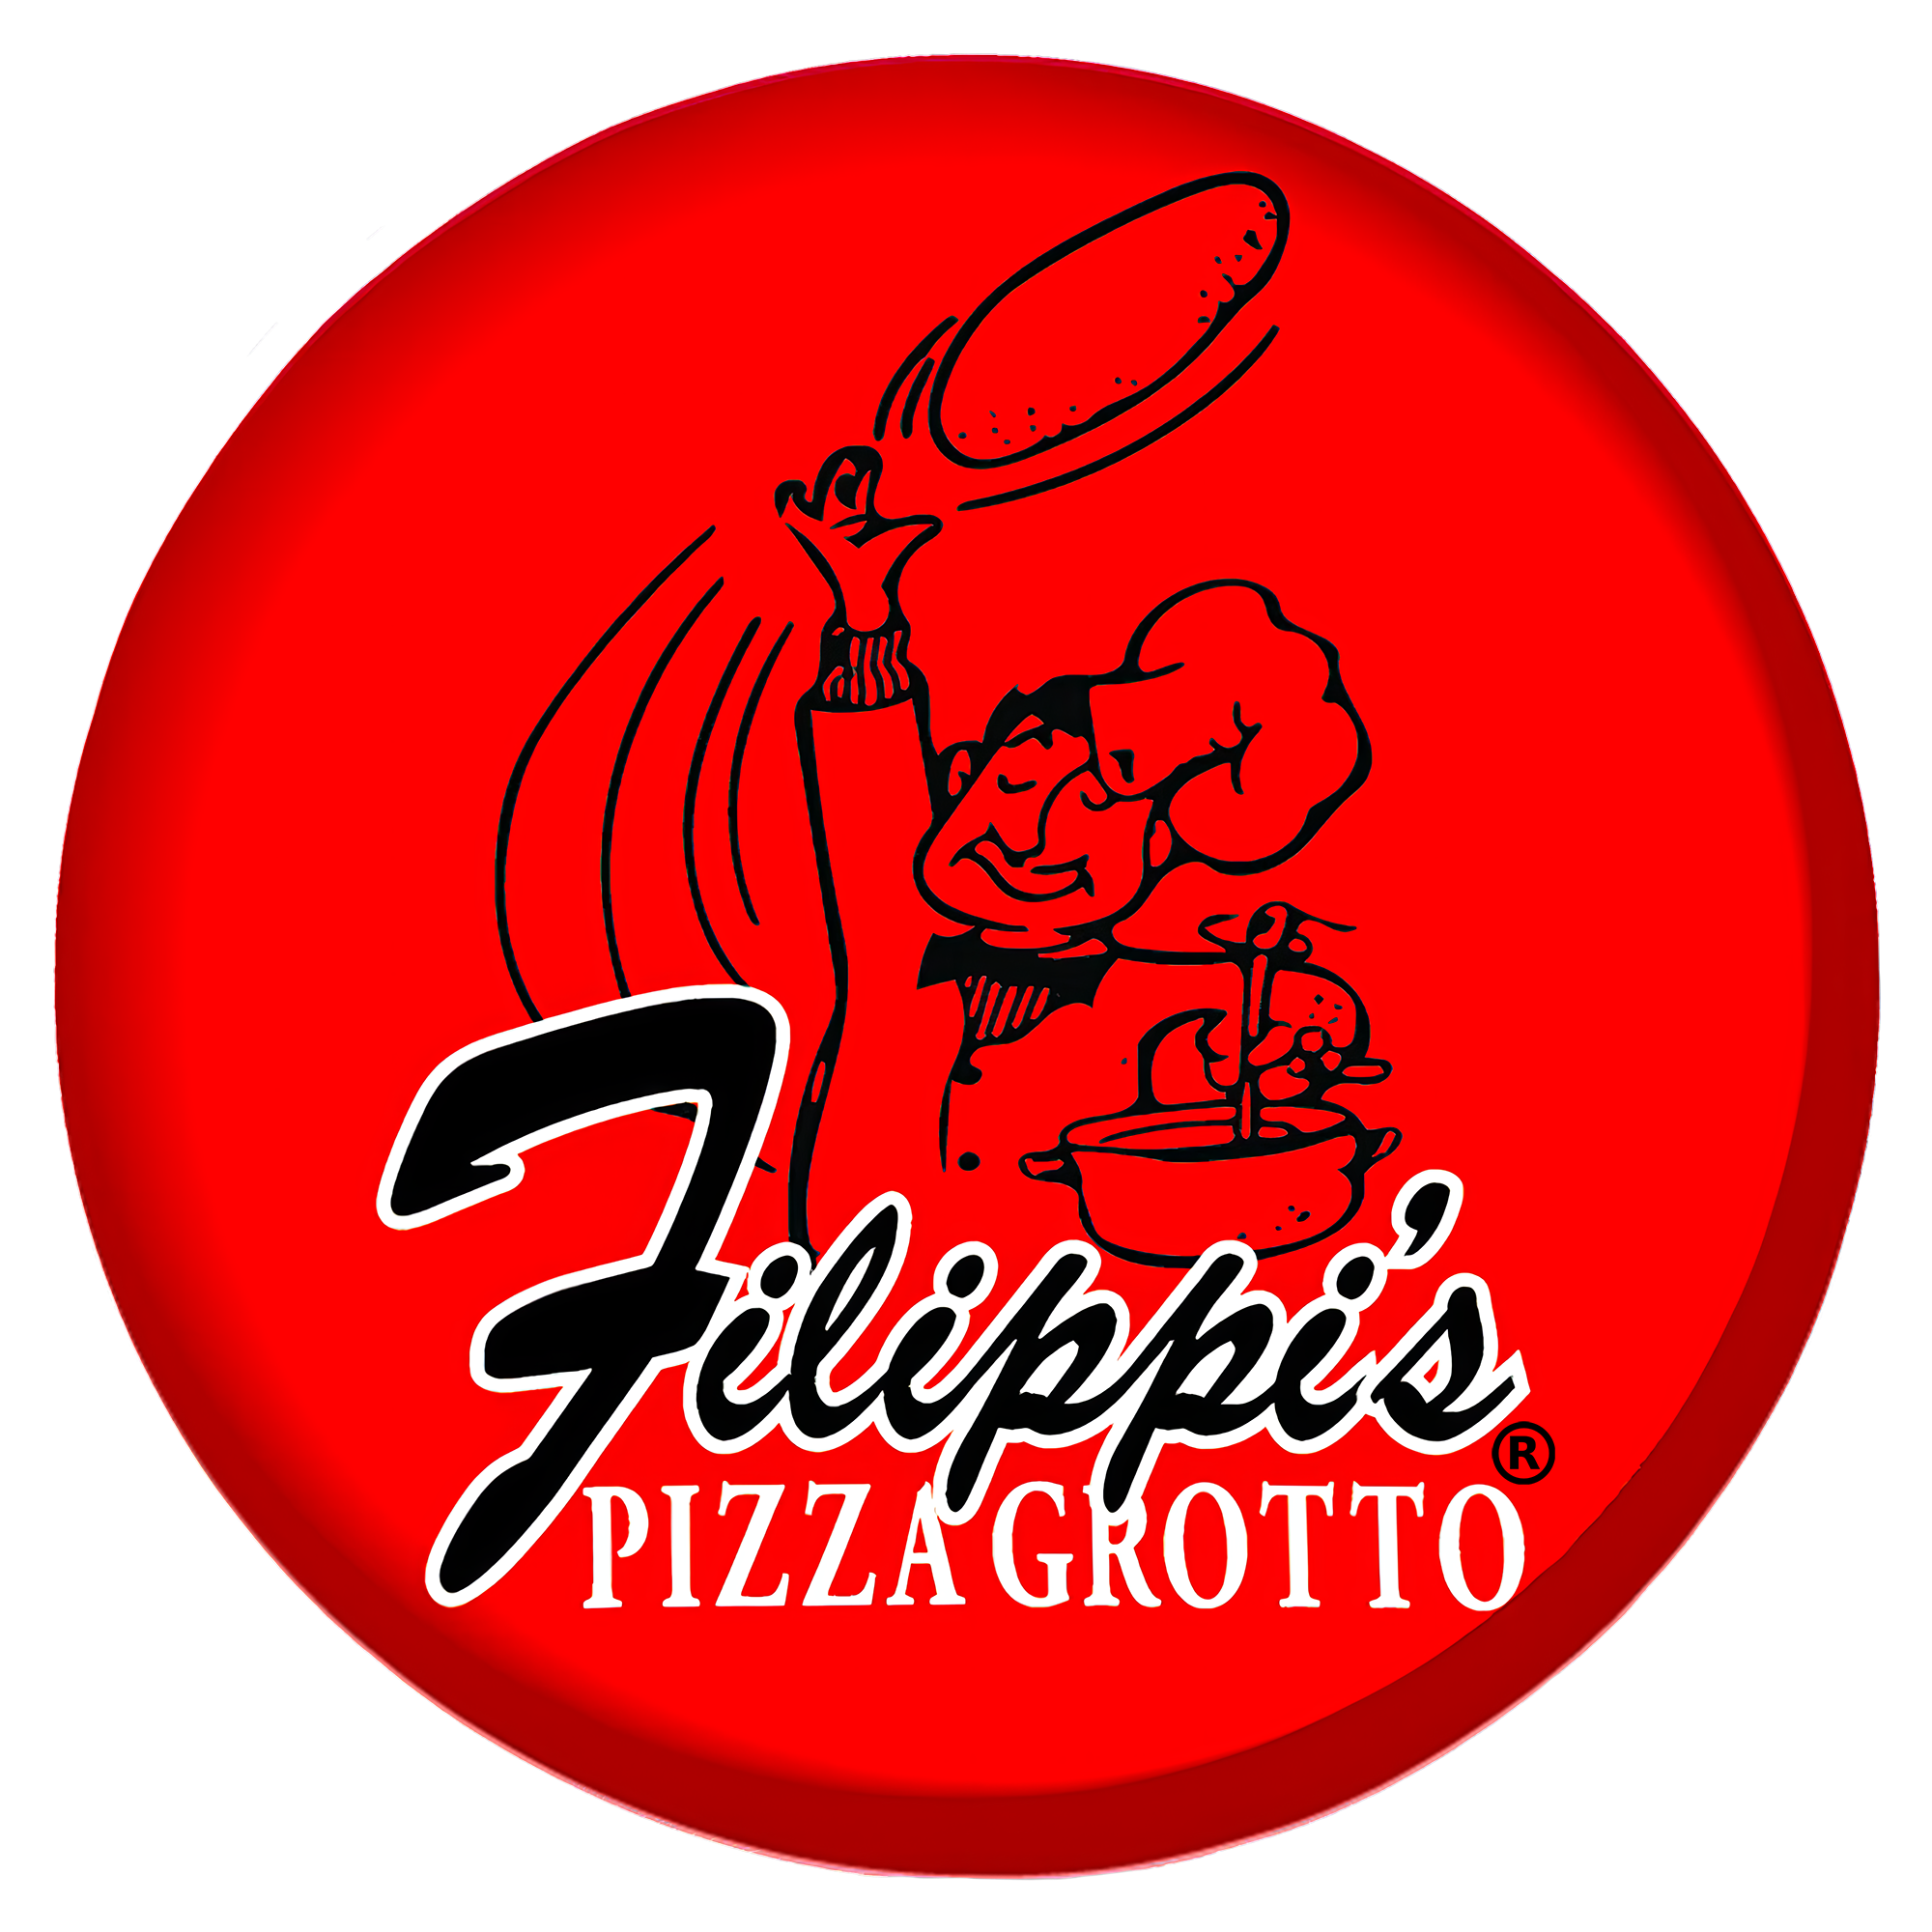 Filippis Pizza Grotto - San Diego Military Advisory Council